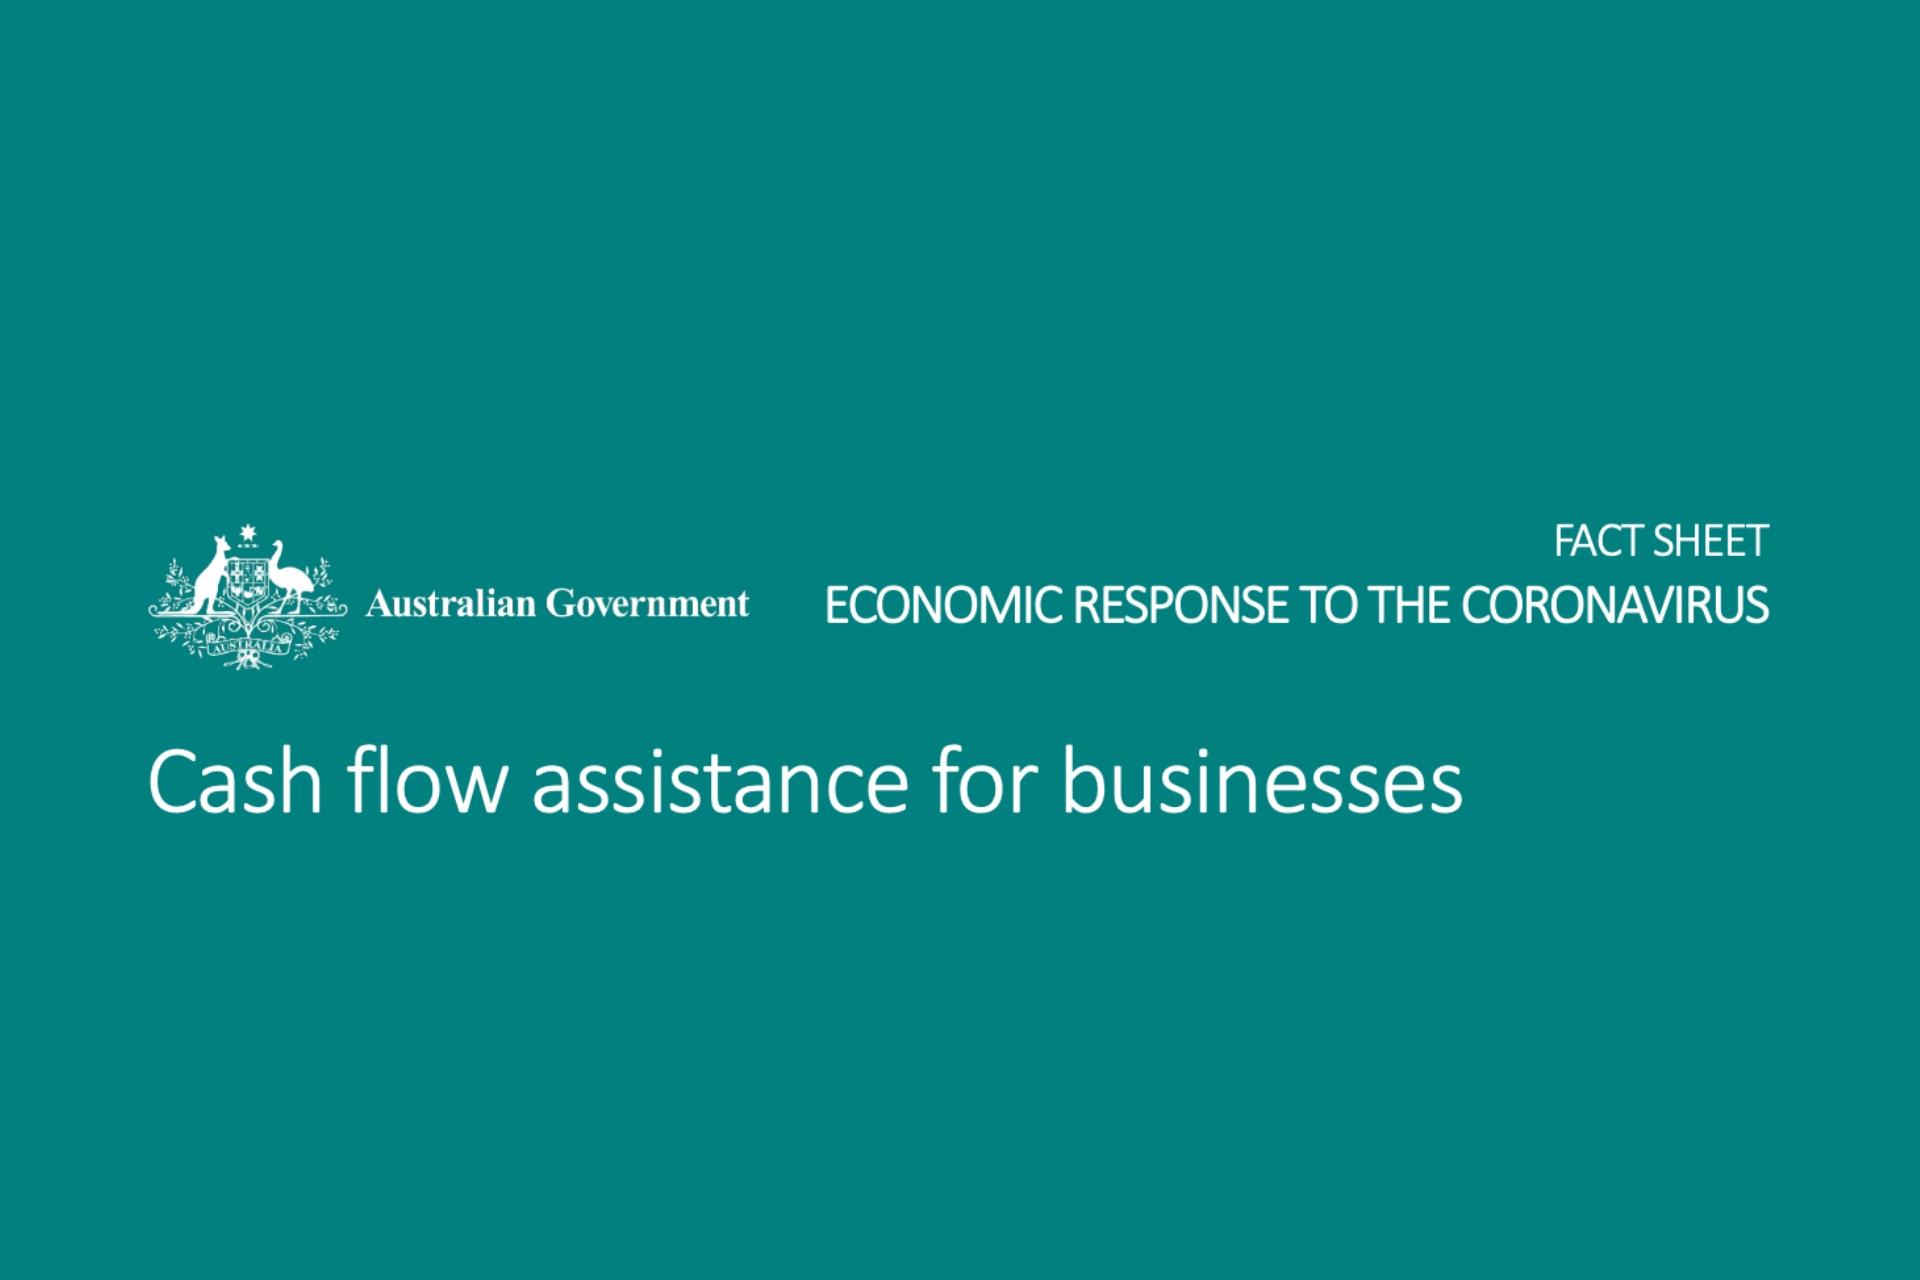 Australian Government Factsheet - Economic Response to the Corona Virus - Cash flow assistance for bussiness